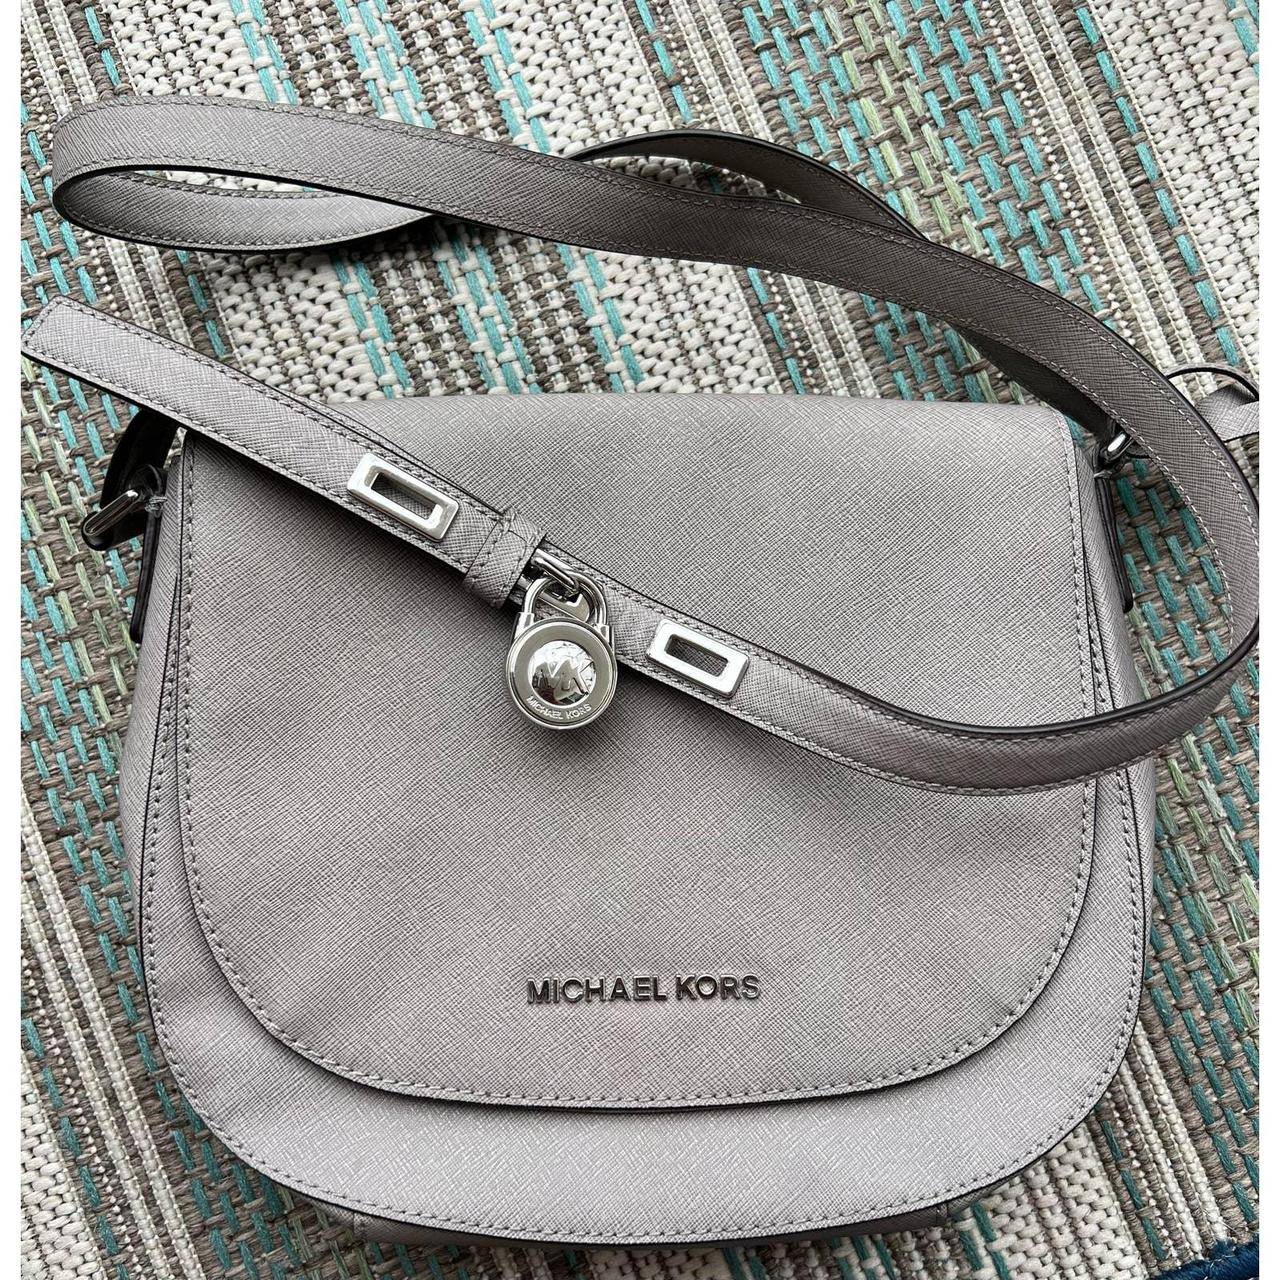 Michael kors Ciara crossbody purse Used Missing Crossbody Strap | eBay